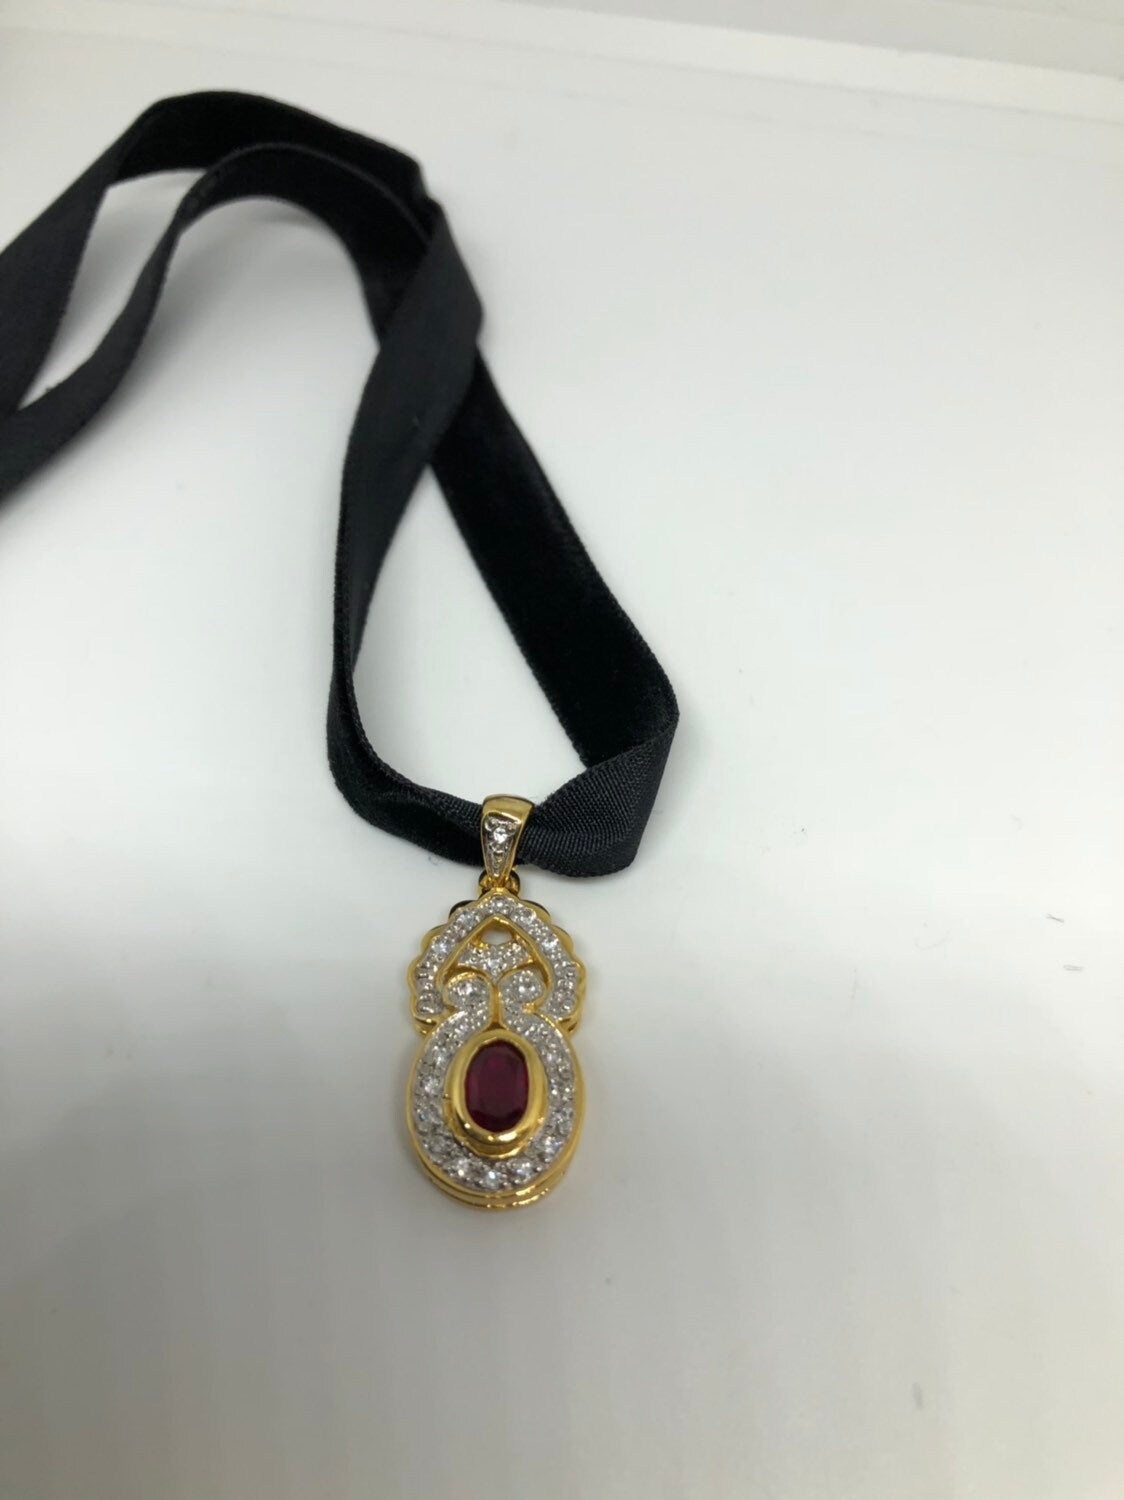 Vintage Handmade 925 Sterling Silver Gold Ruby Pendant